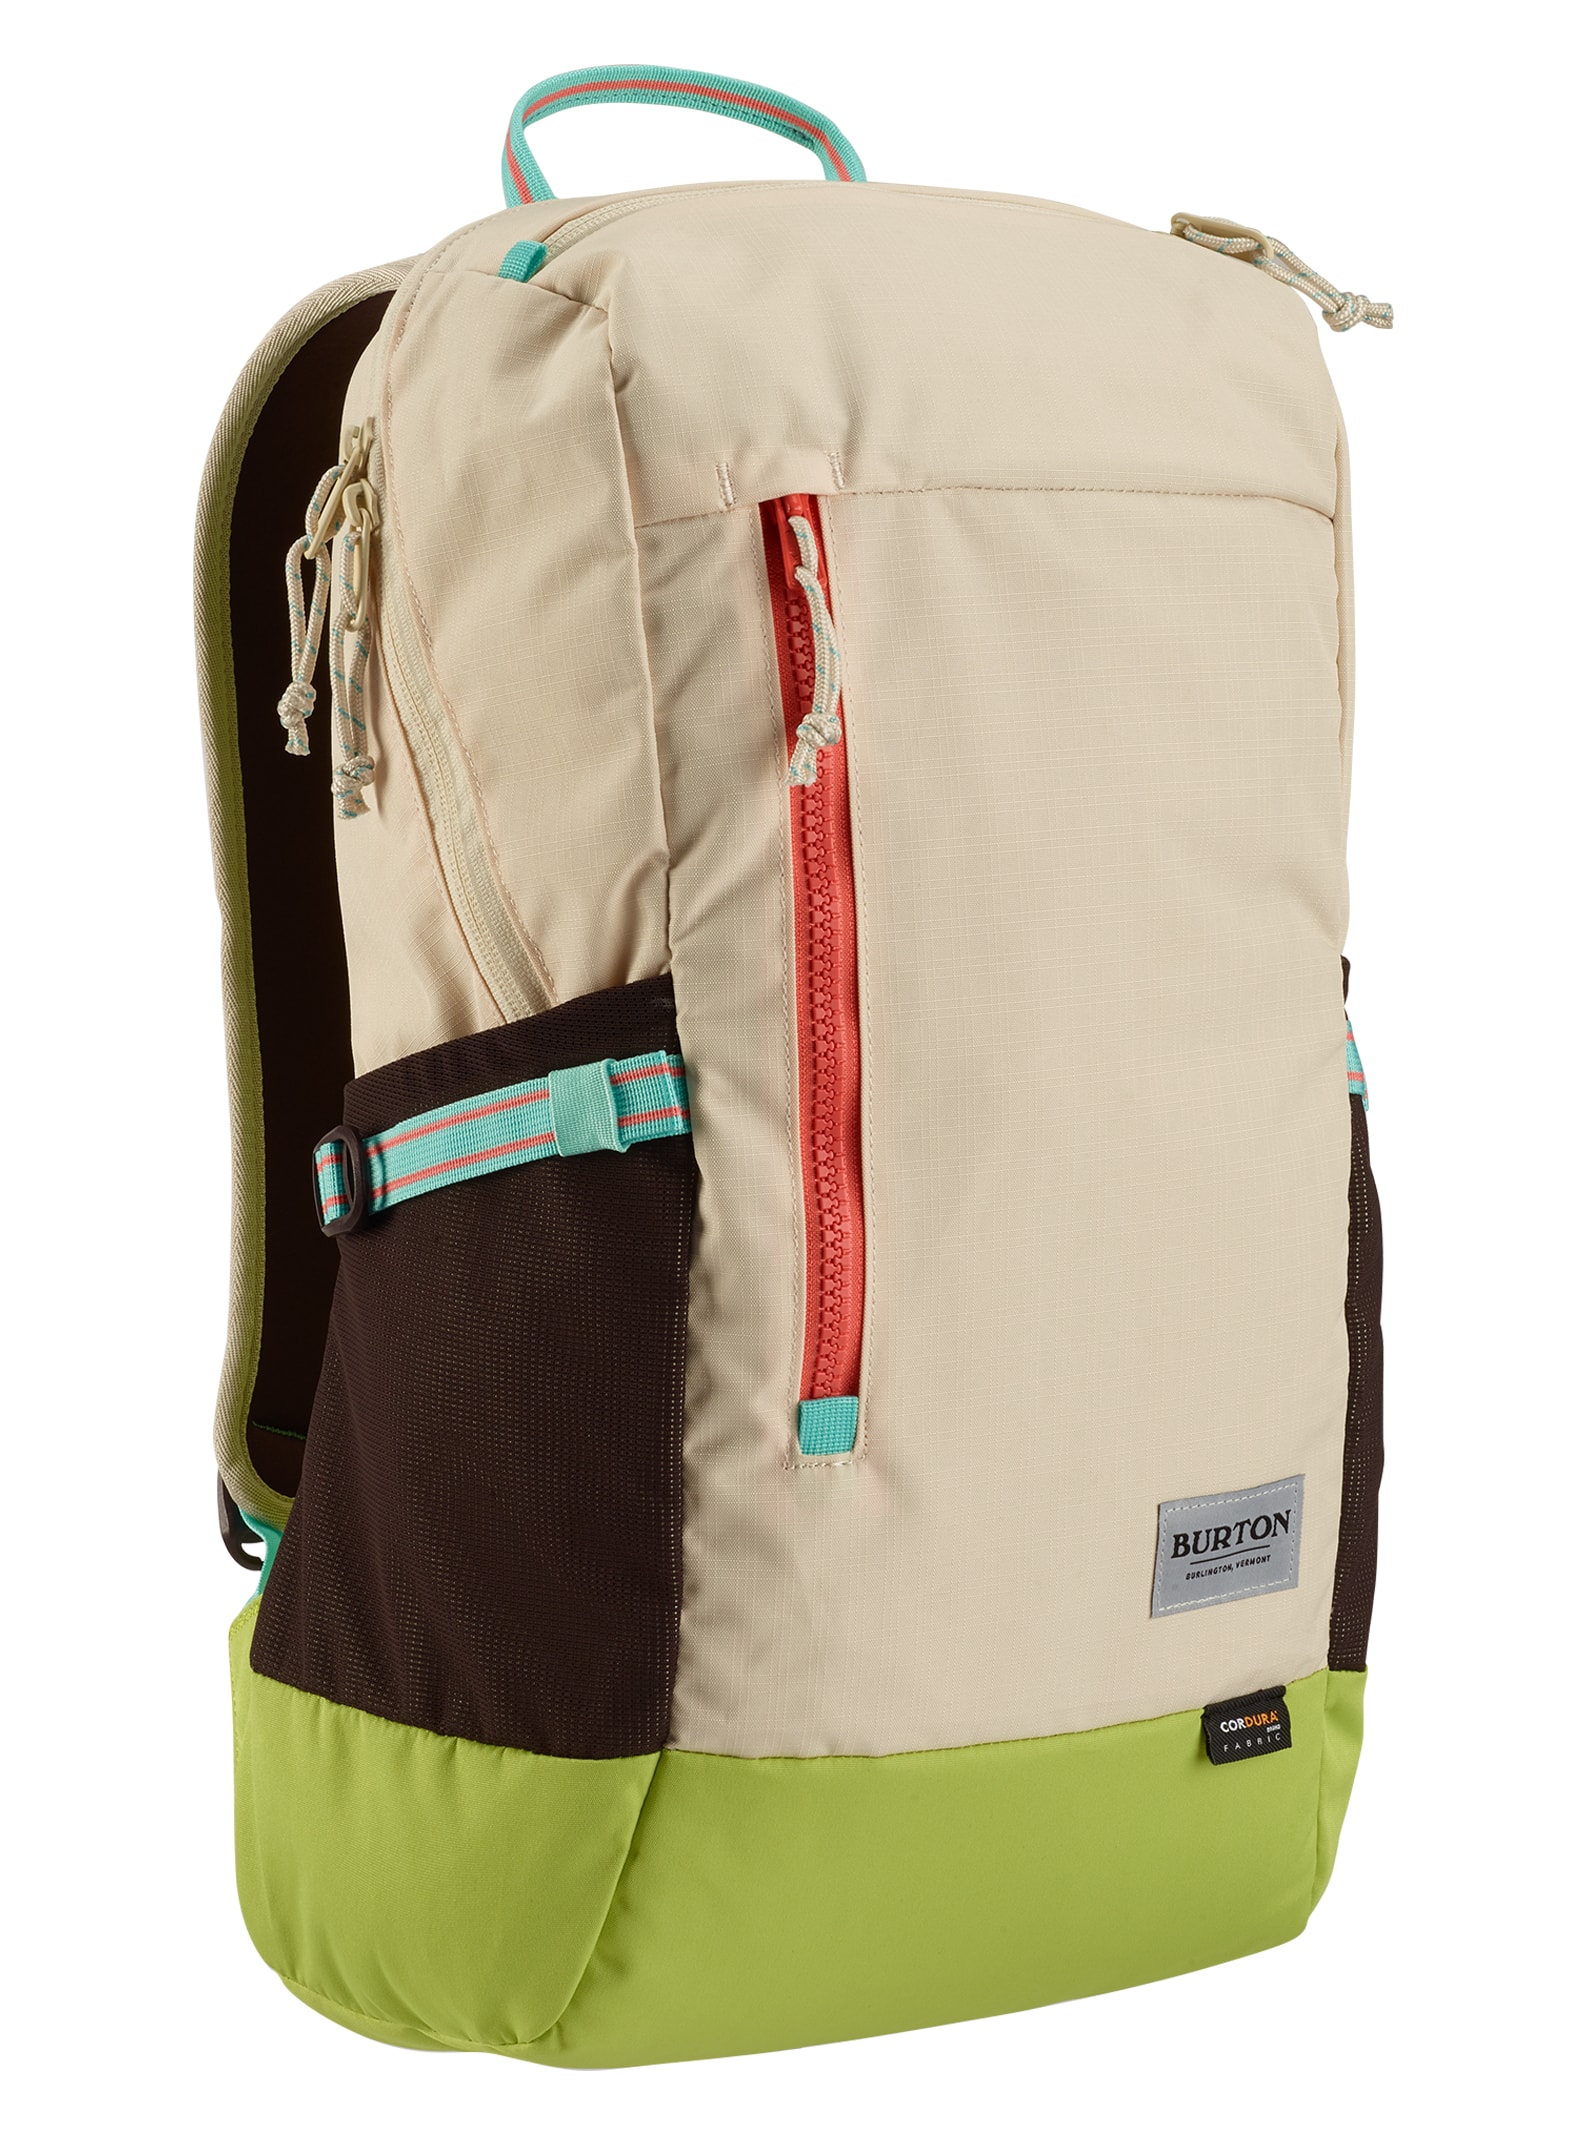 Burton Prospect 2.0 20L Backpack | Burton.com Spring 2020 US